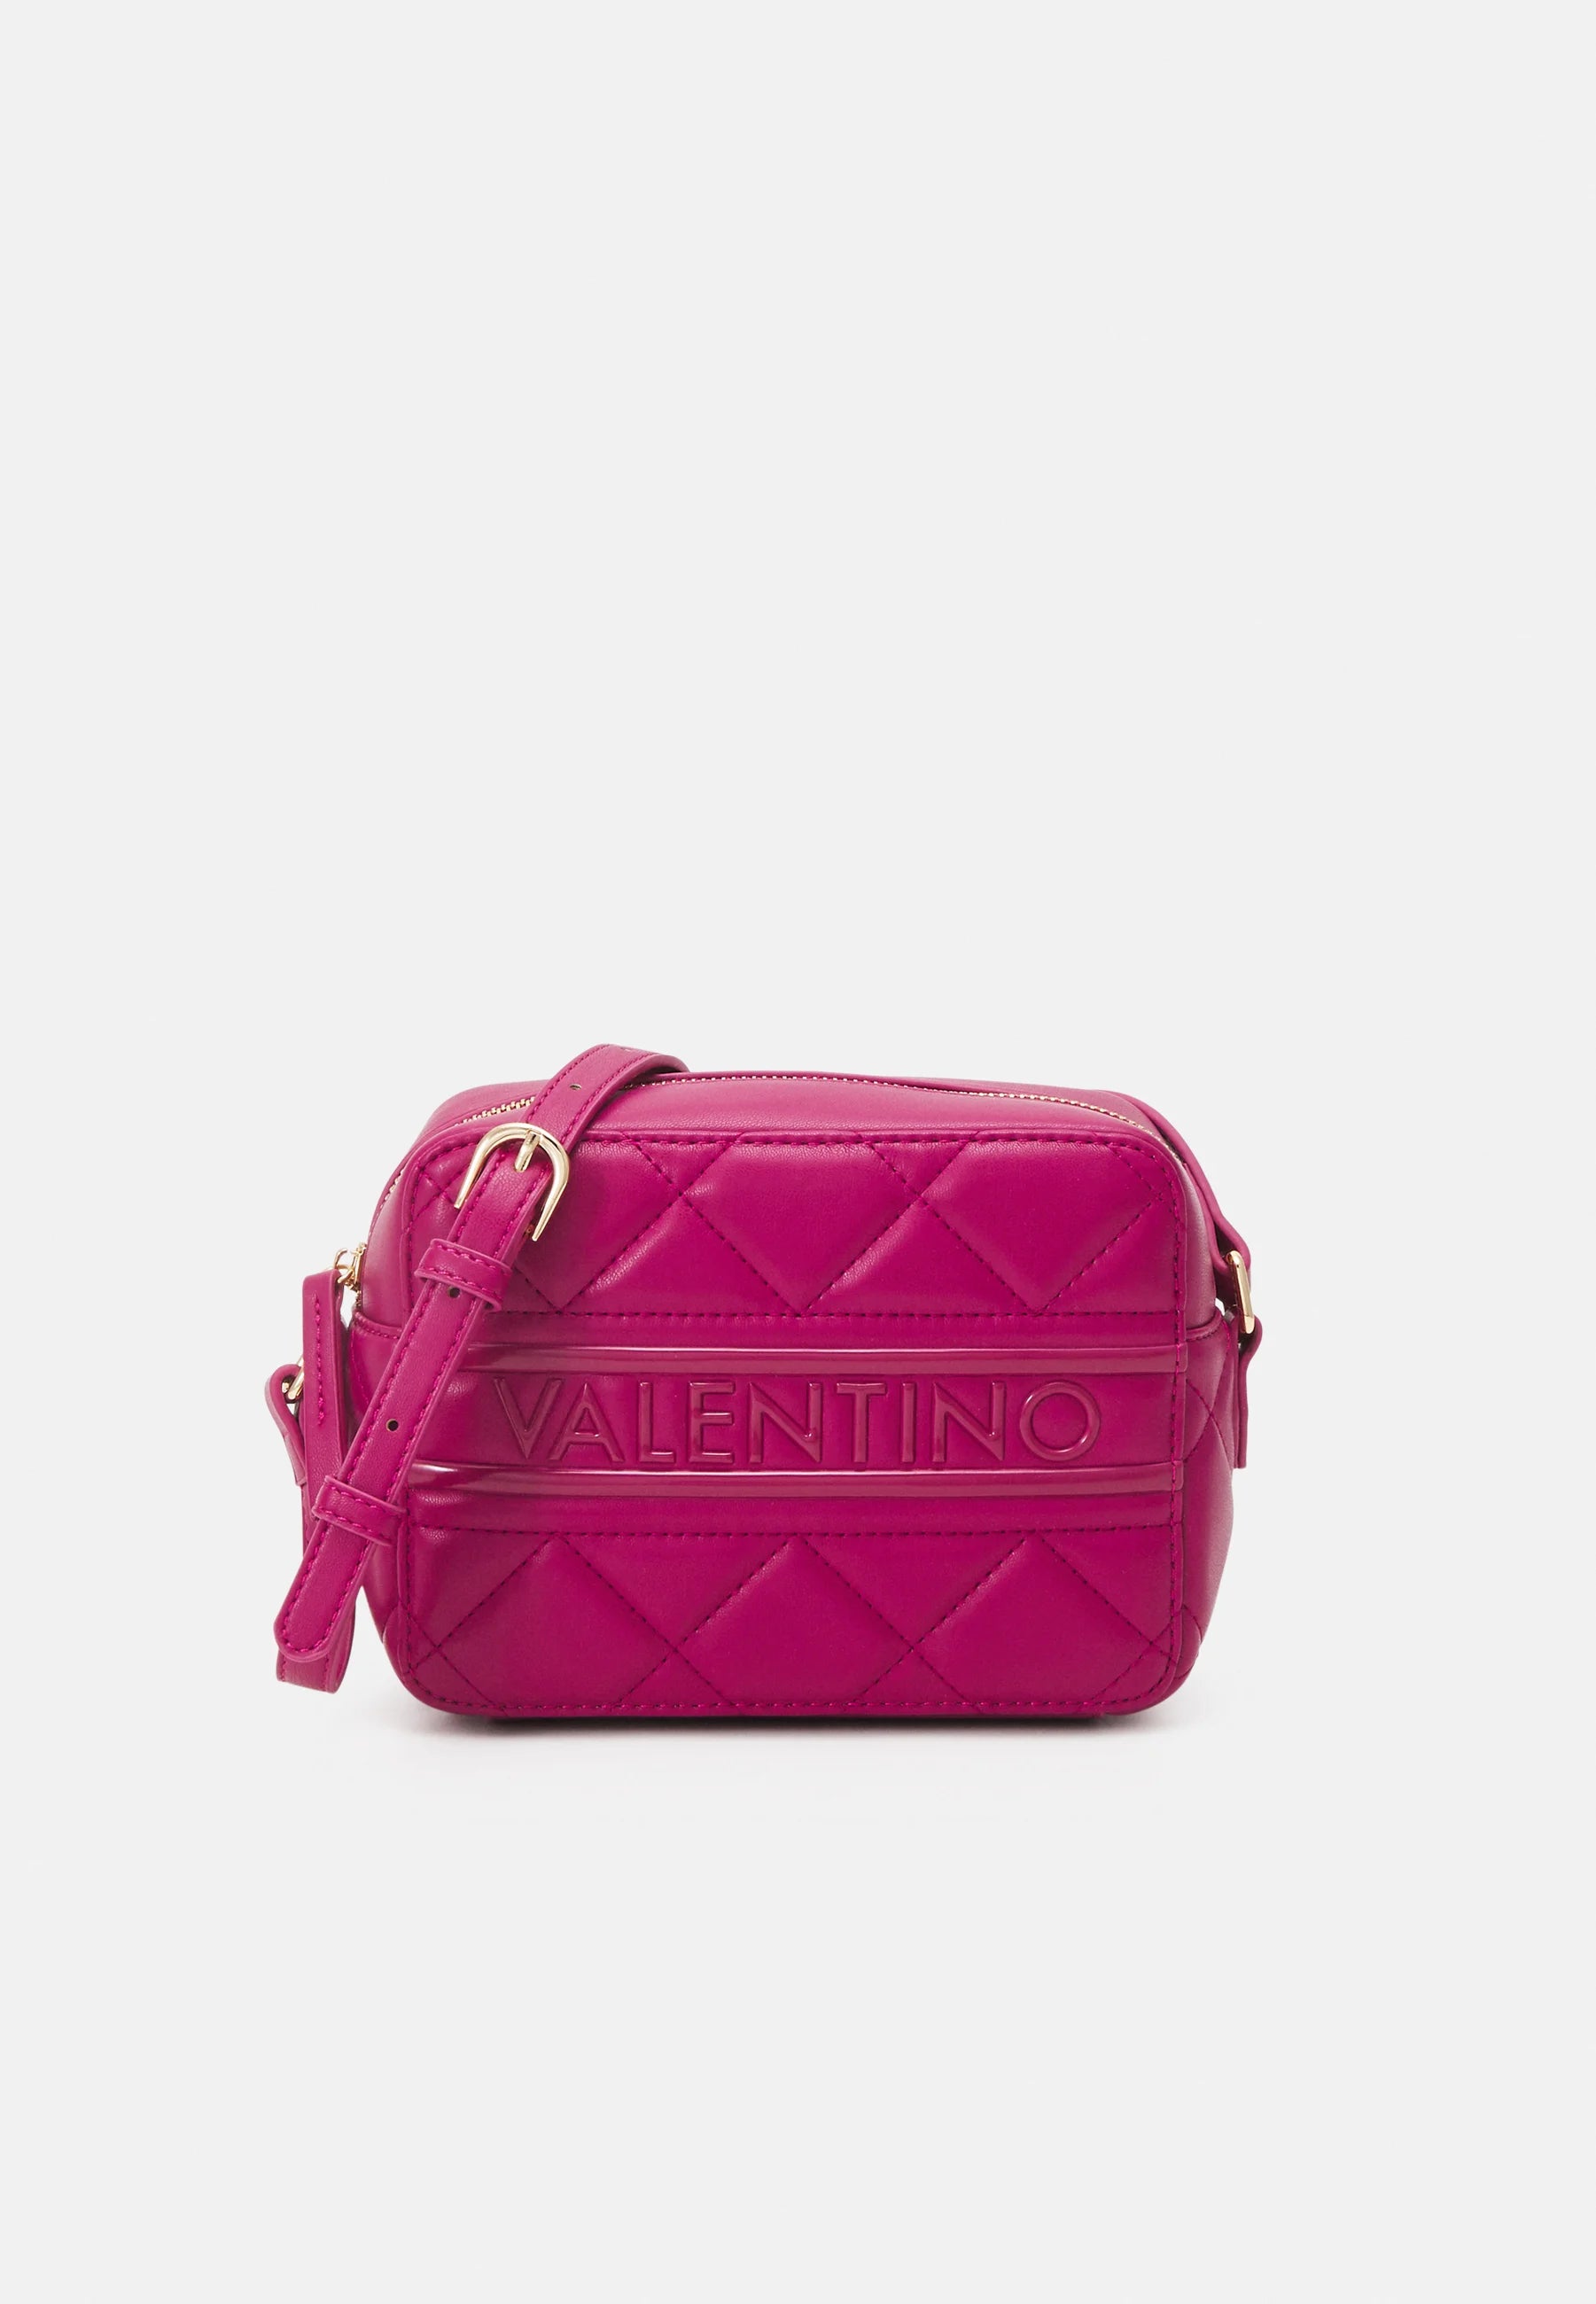 Valentino Ada Bag Pink/Malva